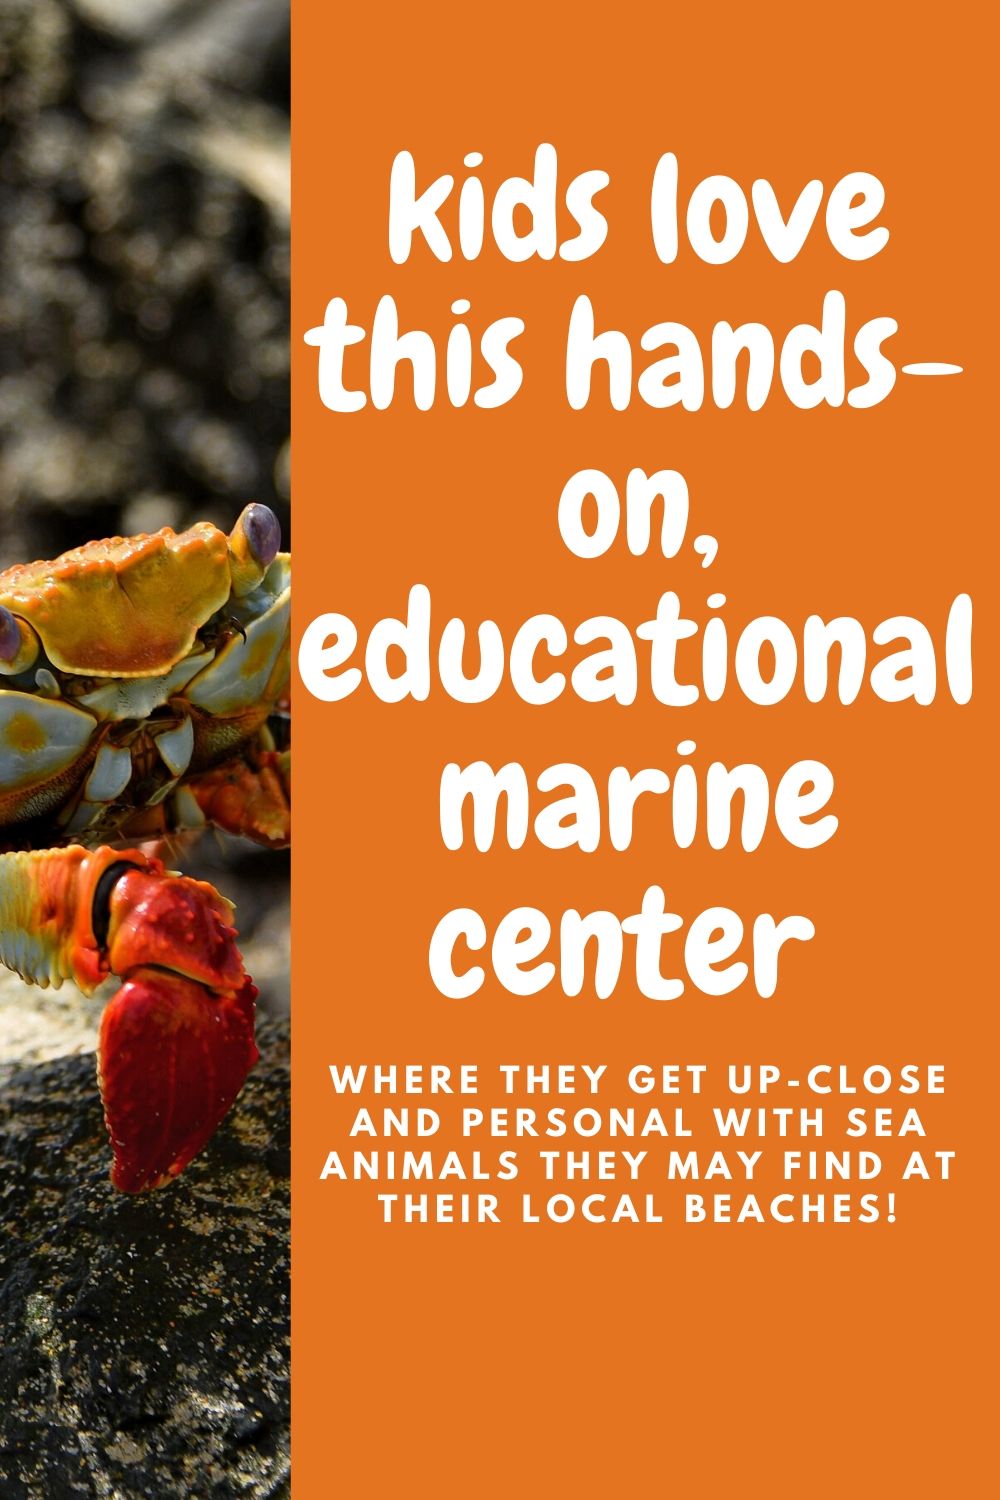 educational marine center